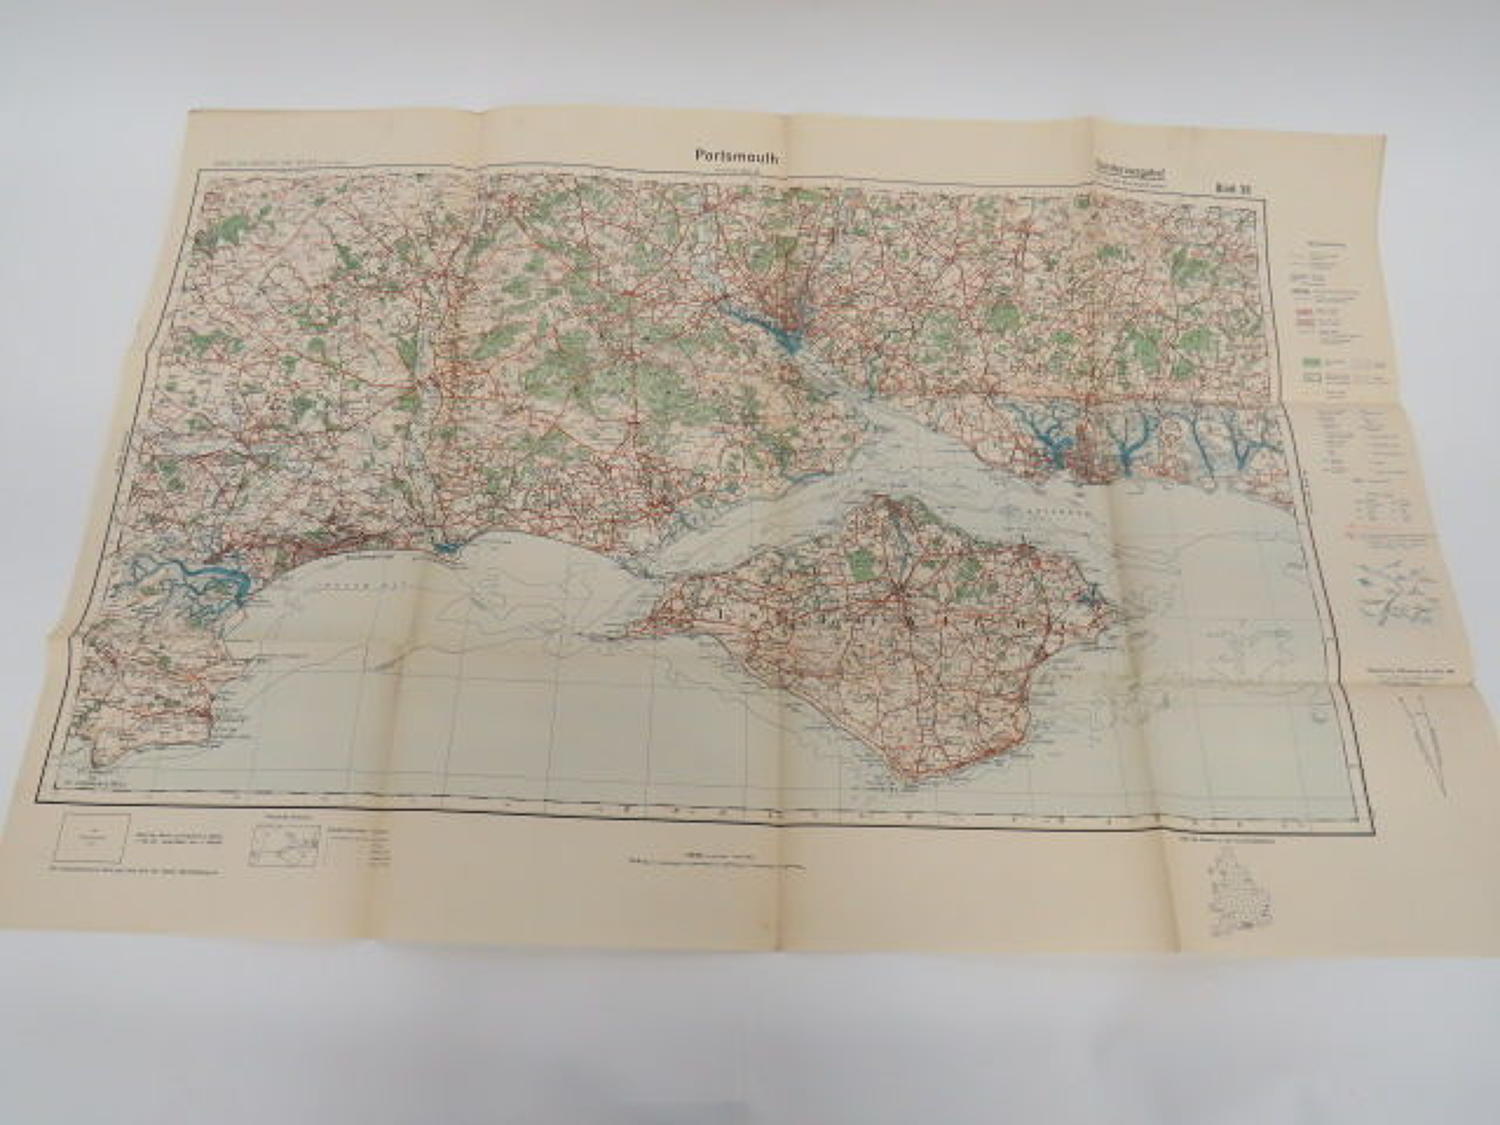 WW 2 German Invasion Map of Portsmouth